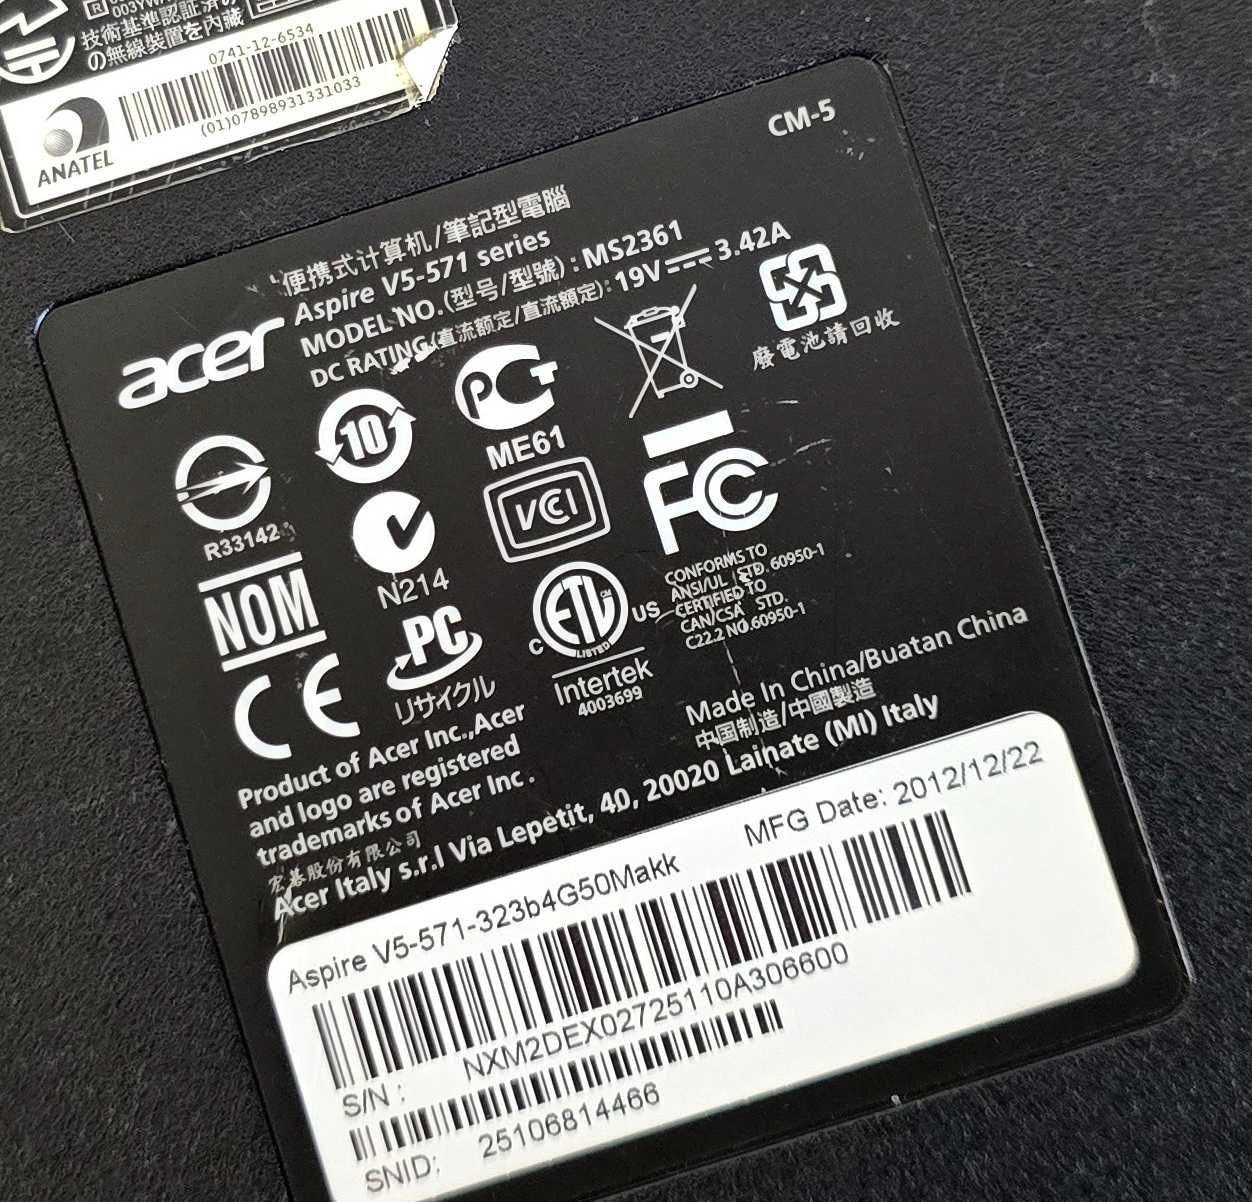 Body core i3 de laptop Acer Aspire V5-571 - functional perfect